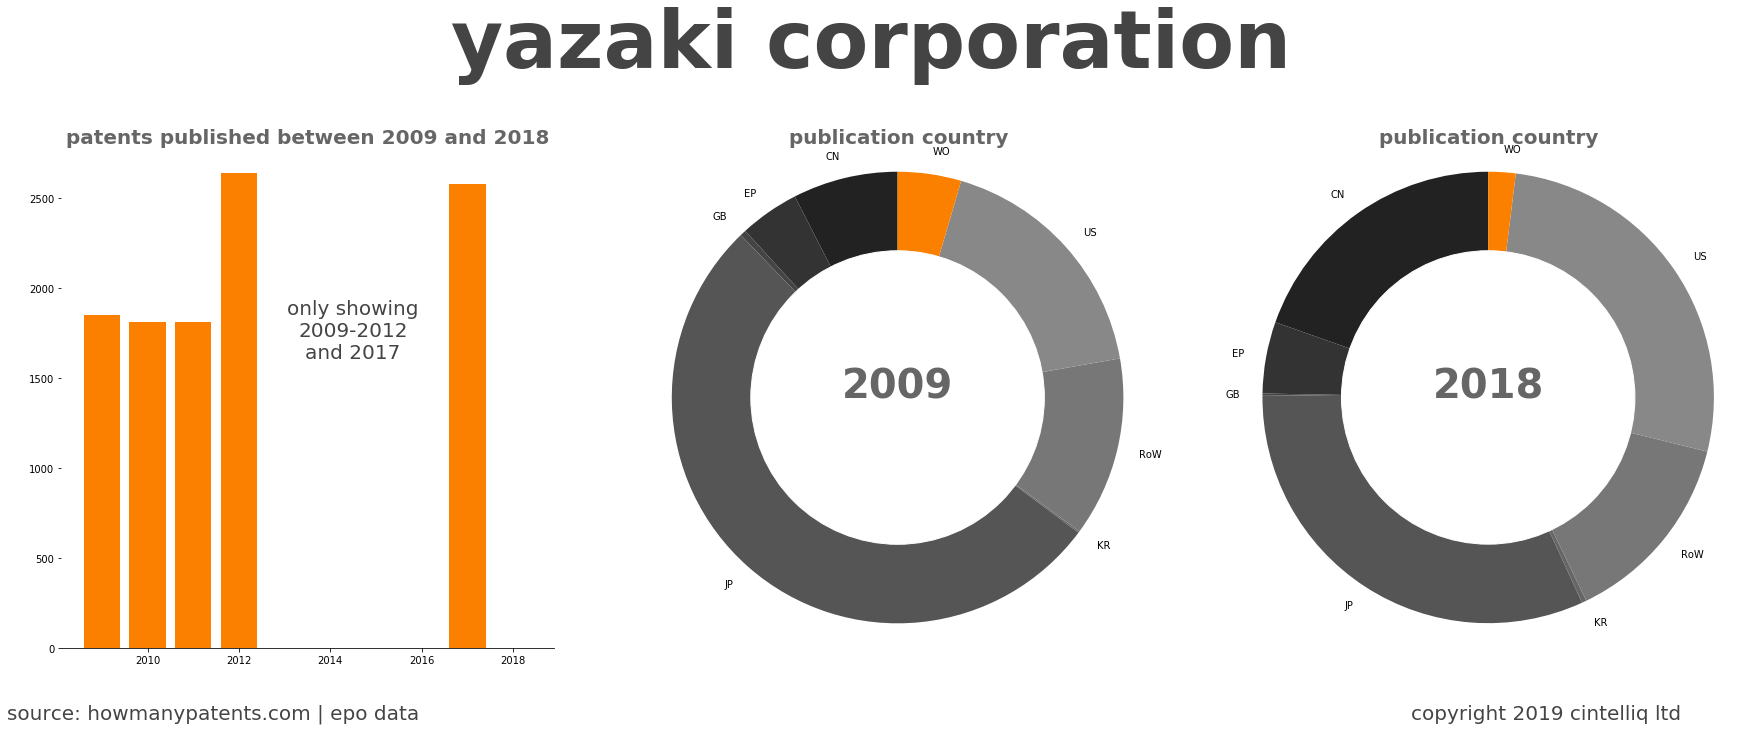 summary of patents for Yazaki Corporation